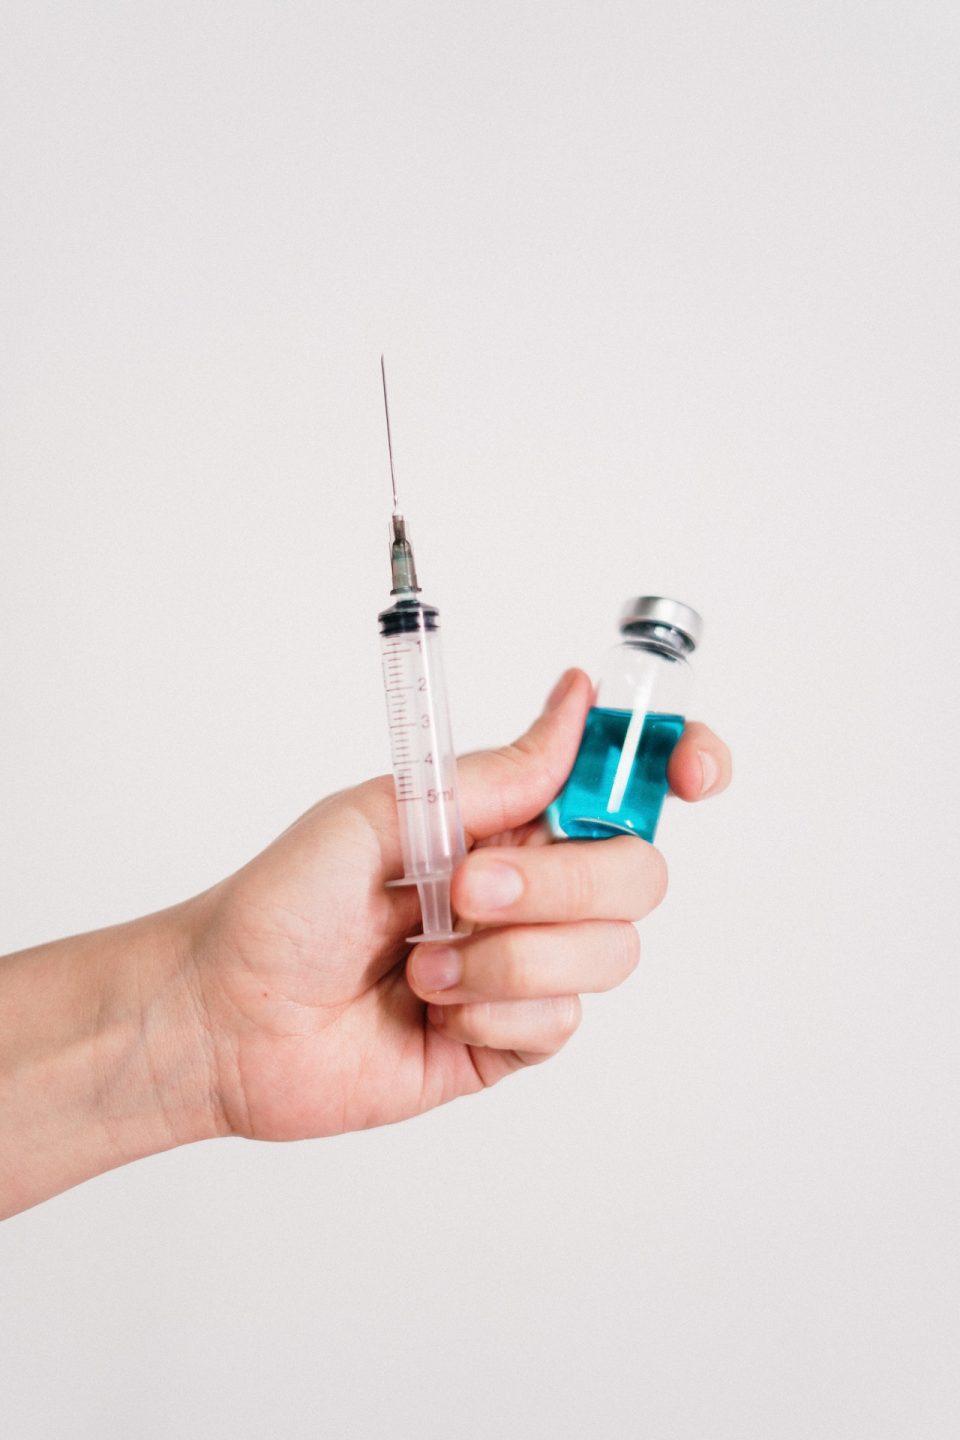 CDC Pfizer's RSV vaccine